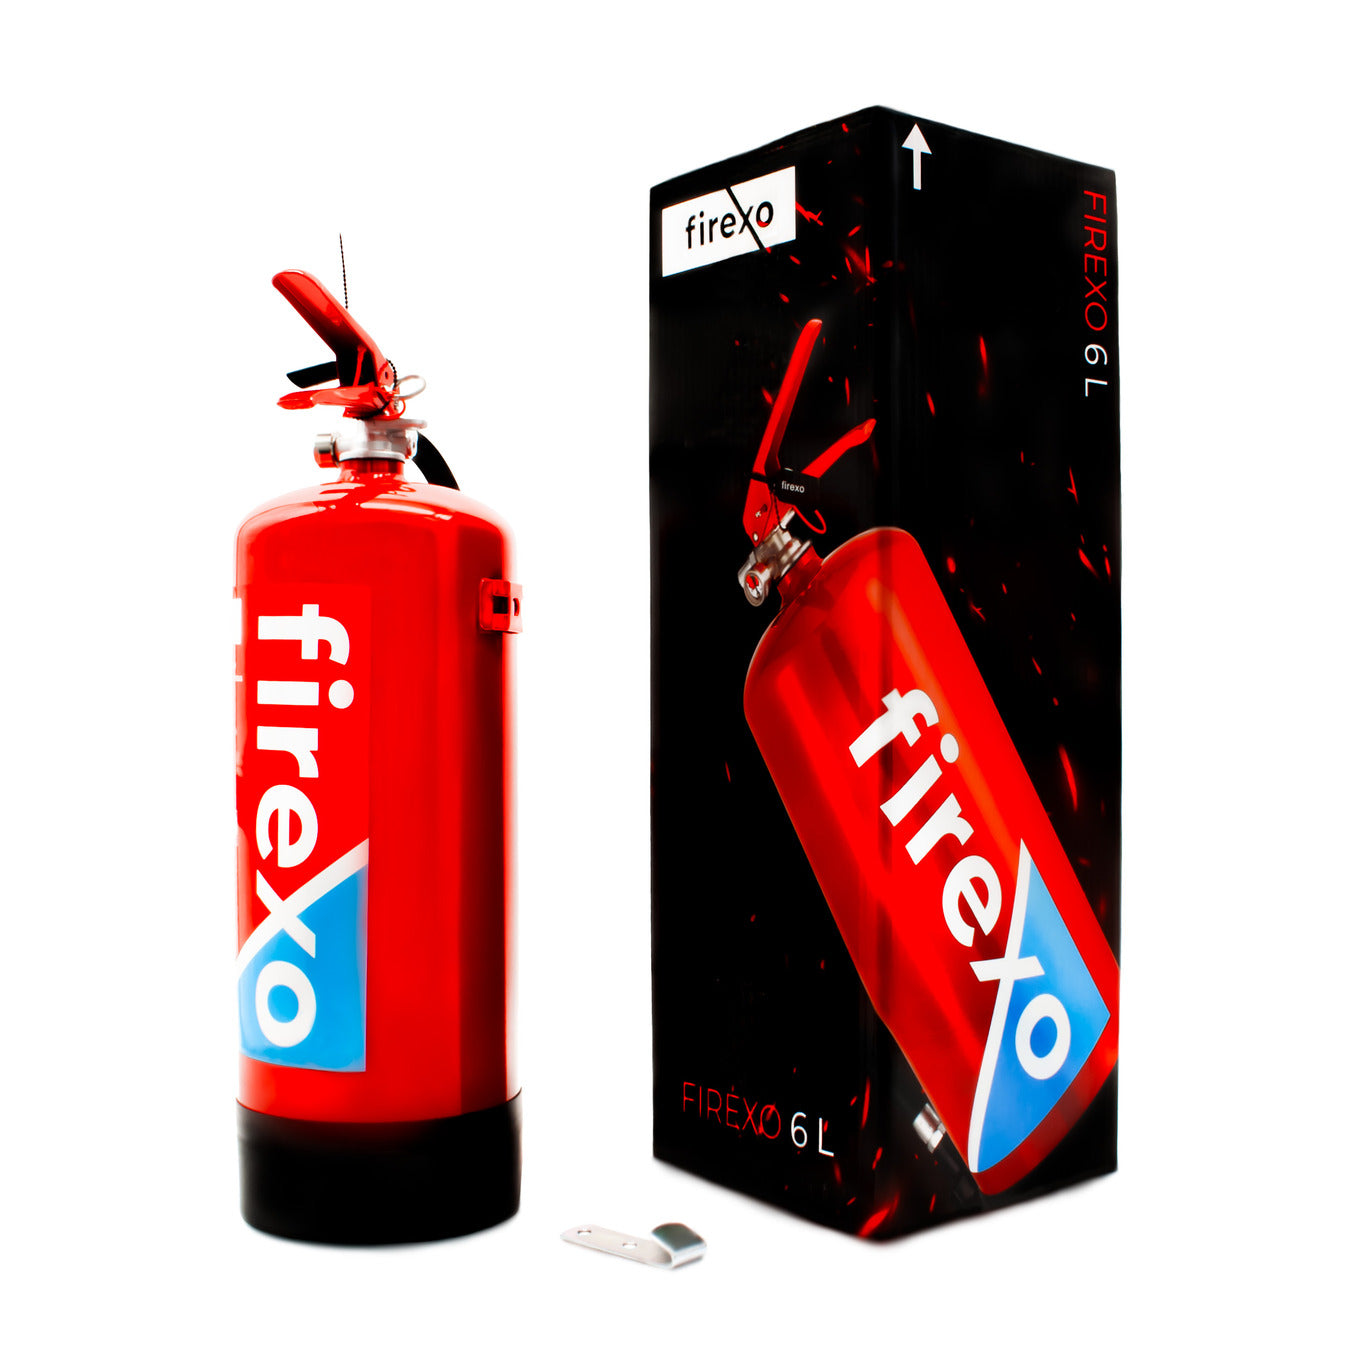 Firexo 6 Litre Fires Extinguisher